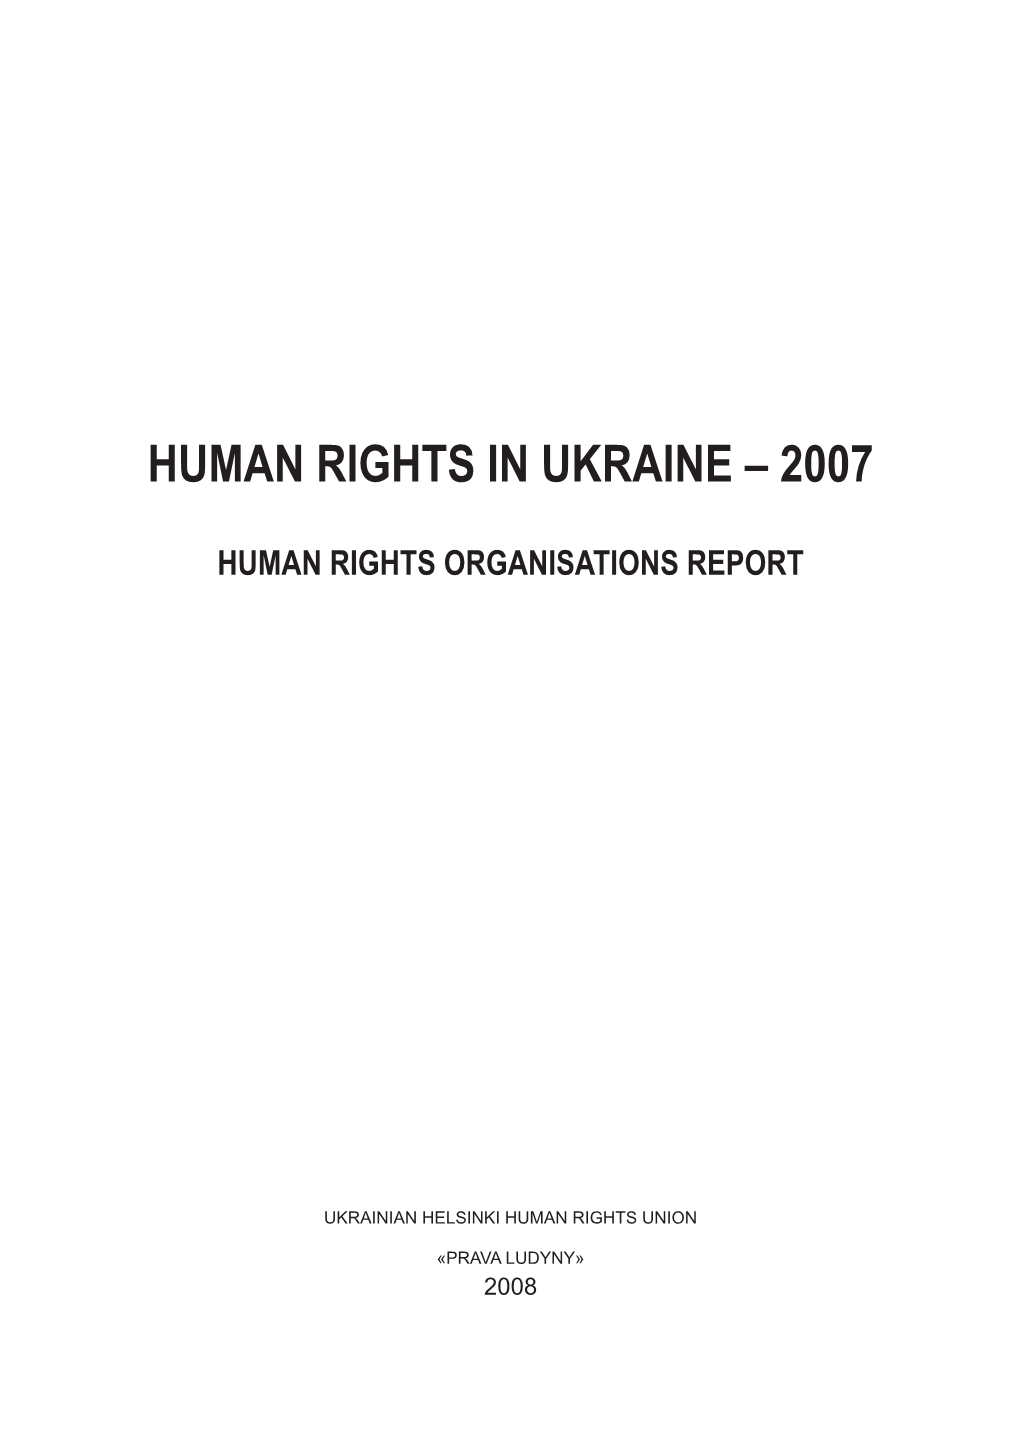 Human Rights in Ukraine – 2007